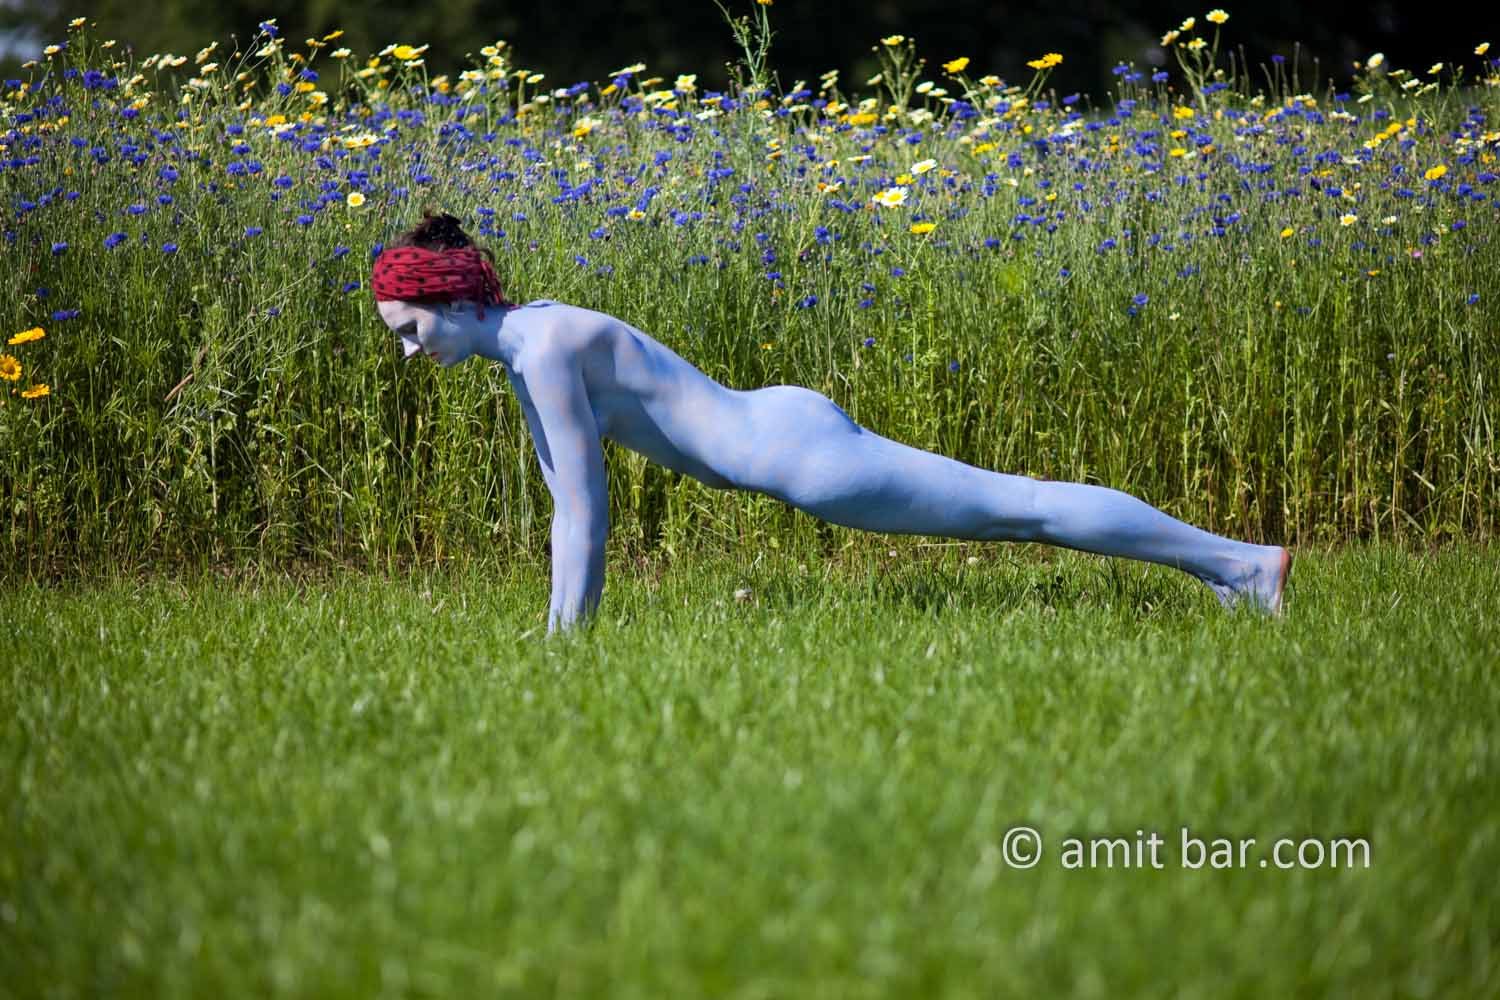 Flower yoga I: Body-painted yoga teacher